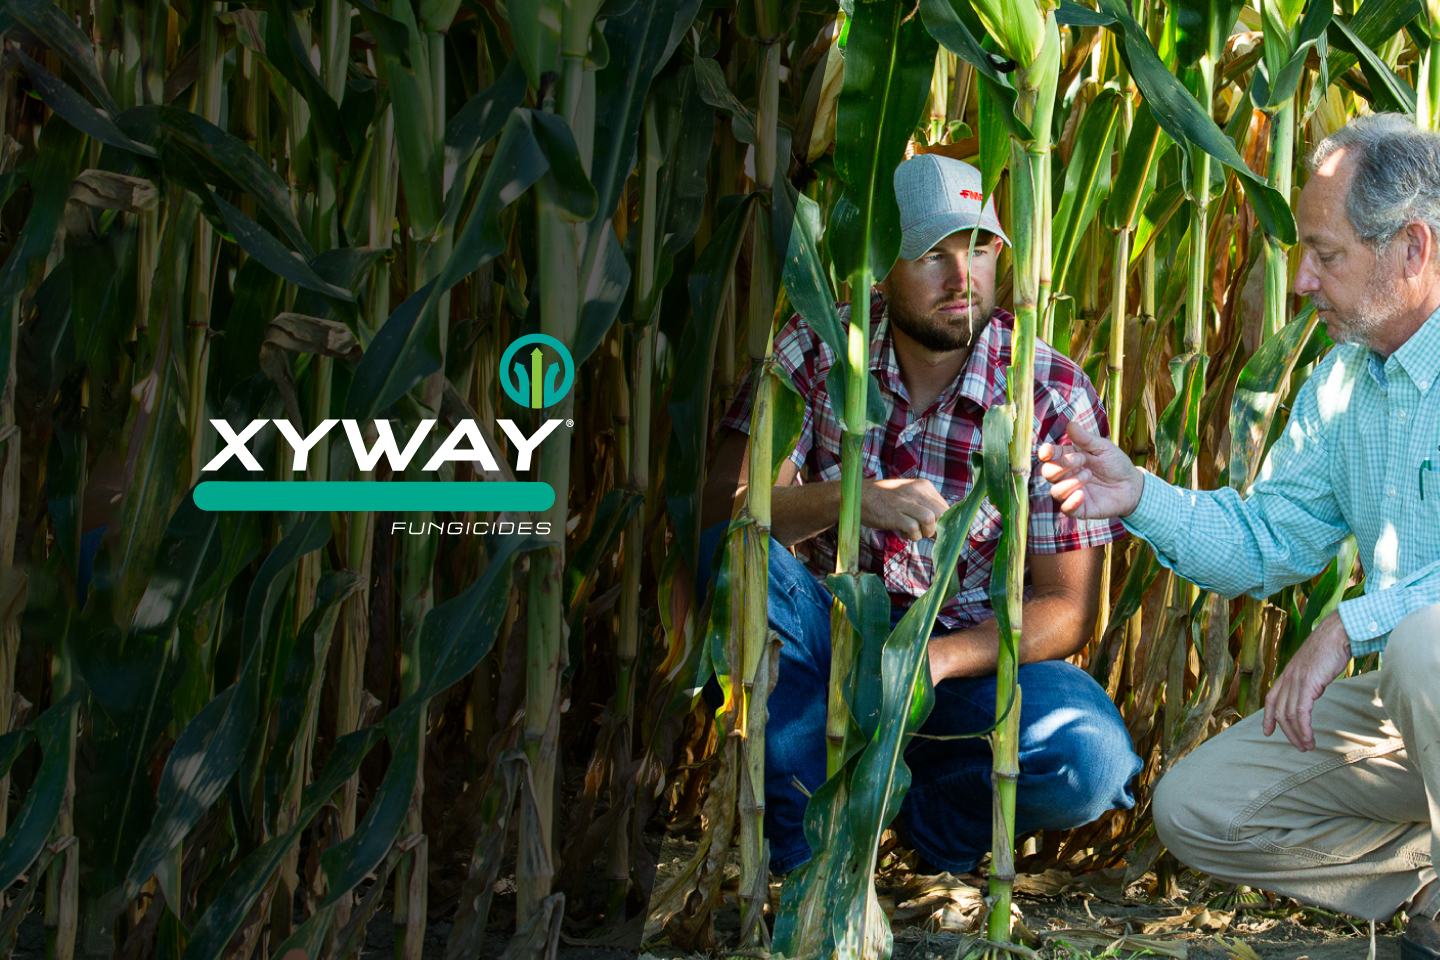 Grower and Retailer In Corn Field